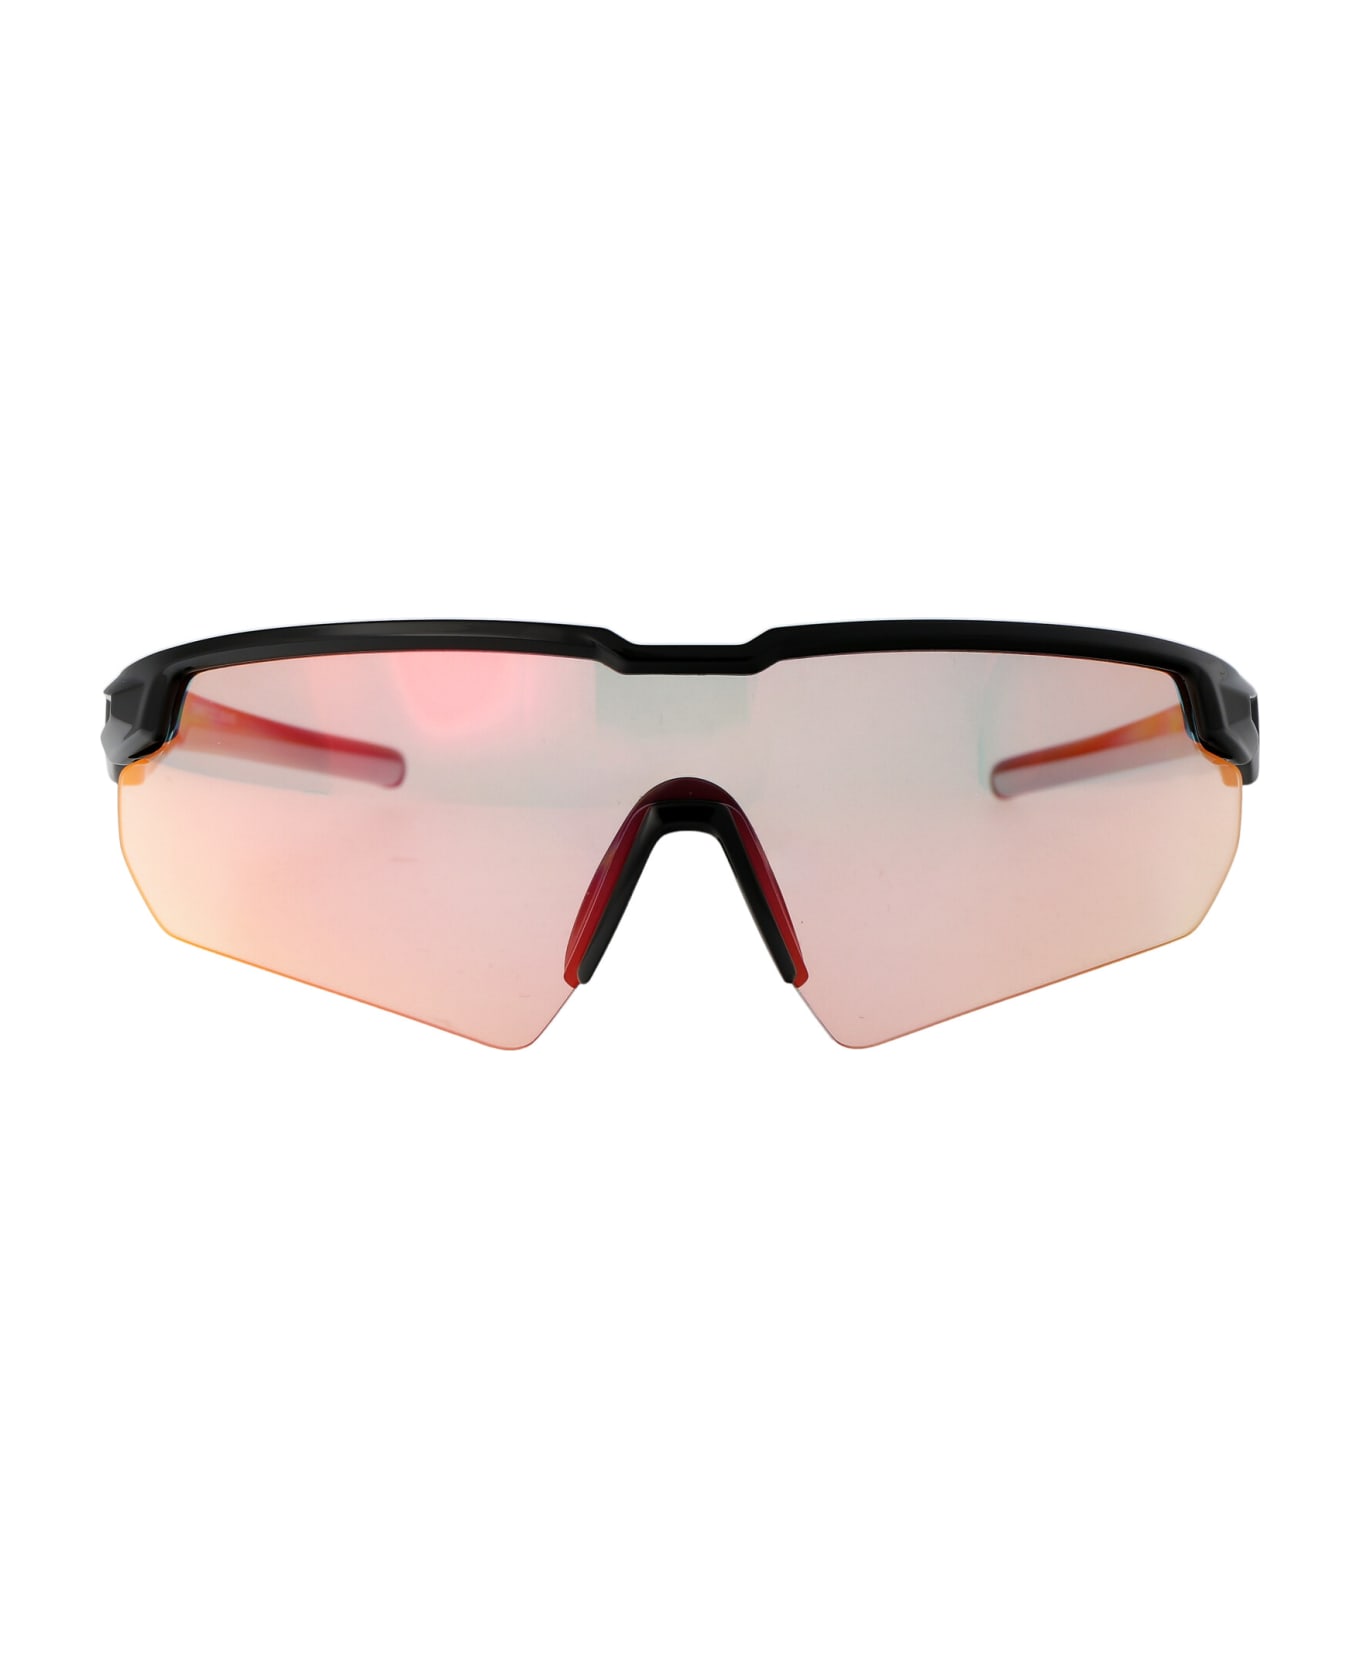 Tommy Hilfiger Tj 0098/s Sunglasses - Fendi Transparent Teal Sunglasses